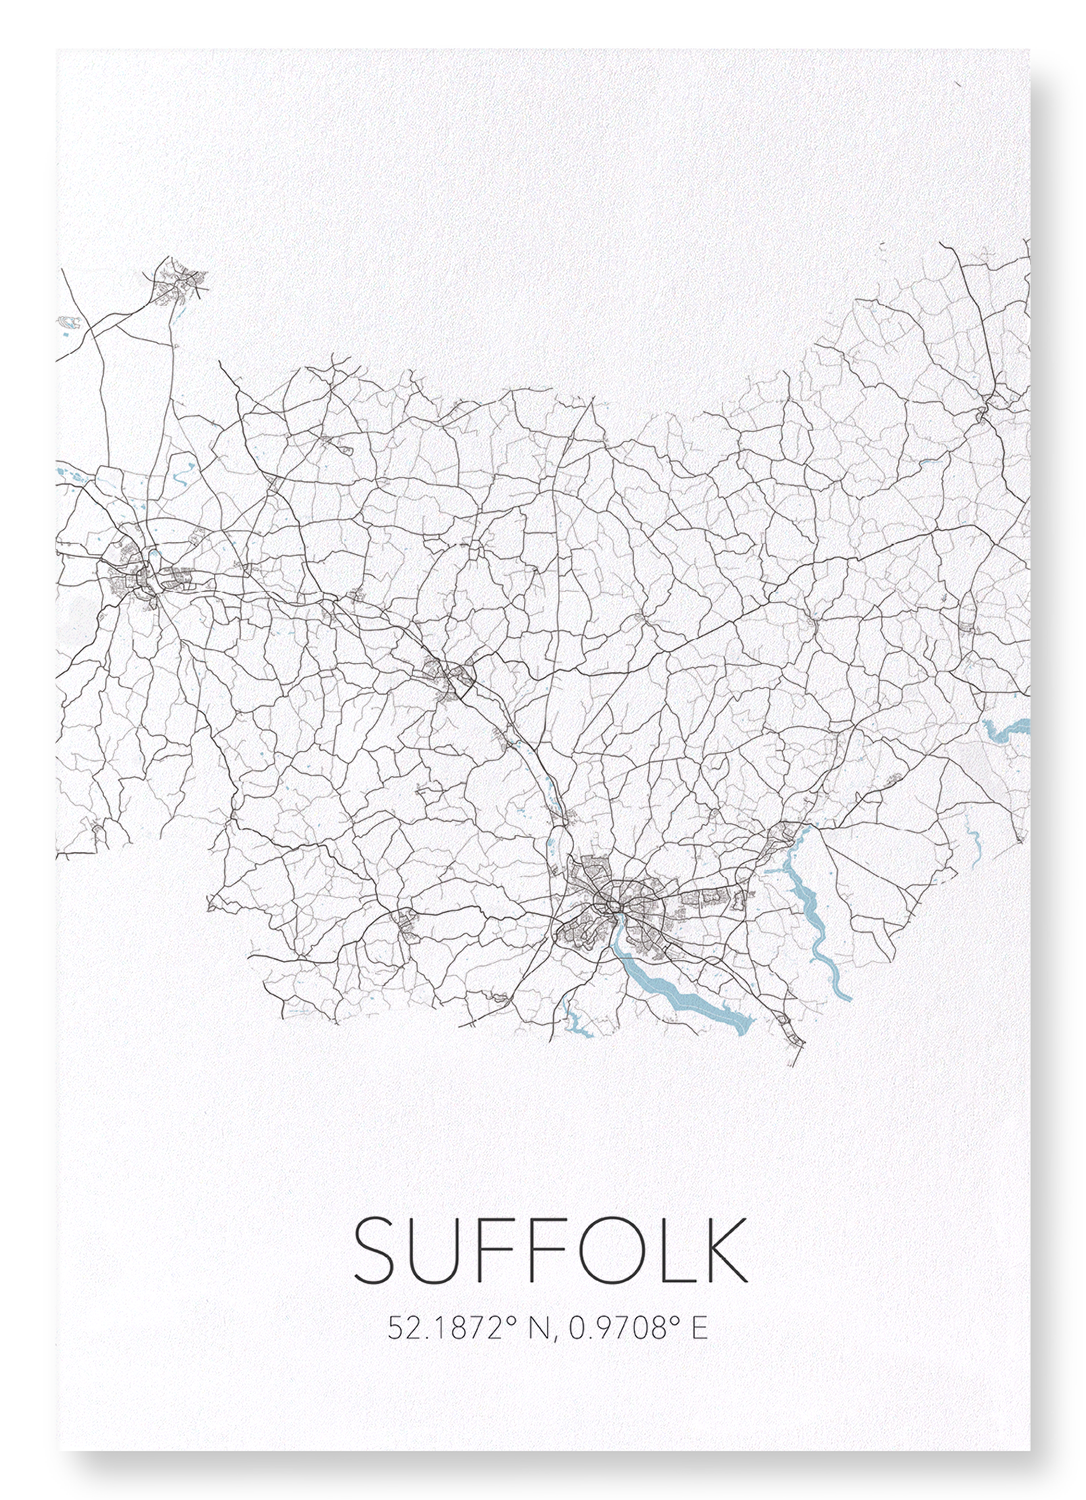 SUFFOLK CUTOUT: Map Cutout Art Print